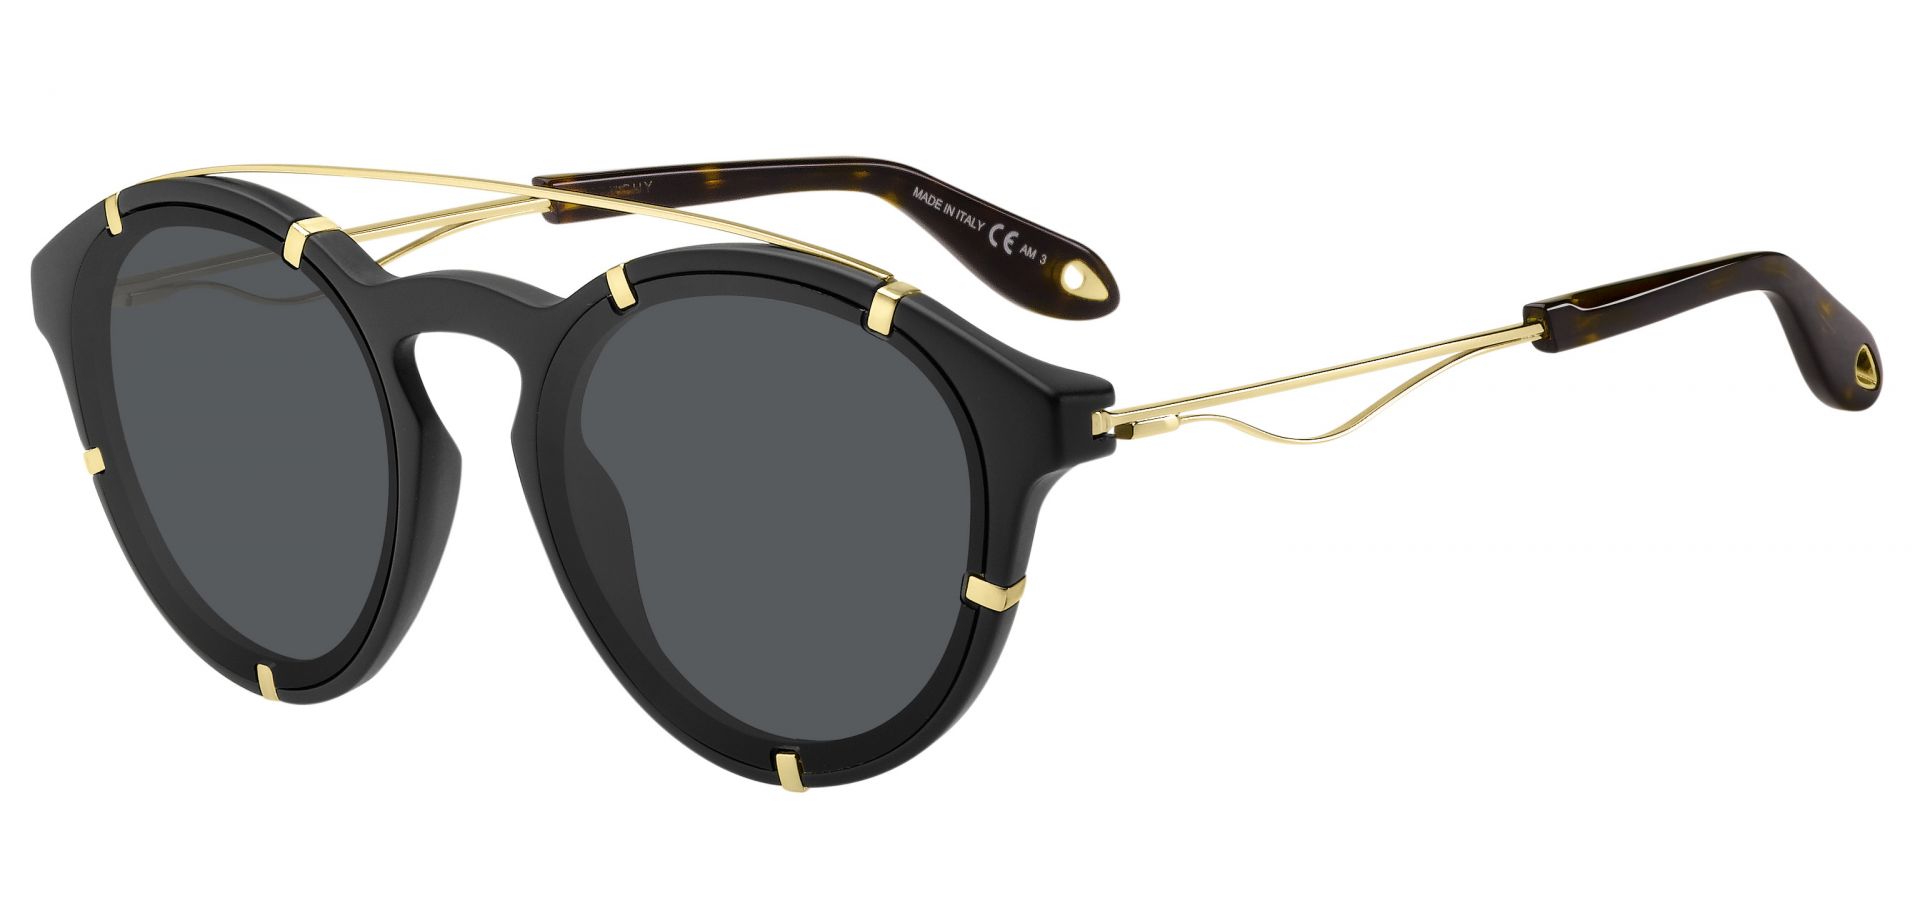 Sončna očala Givenchy GV7088: Velikost: 54/19/145, Spol: unisex, Material: acetat/kovinska